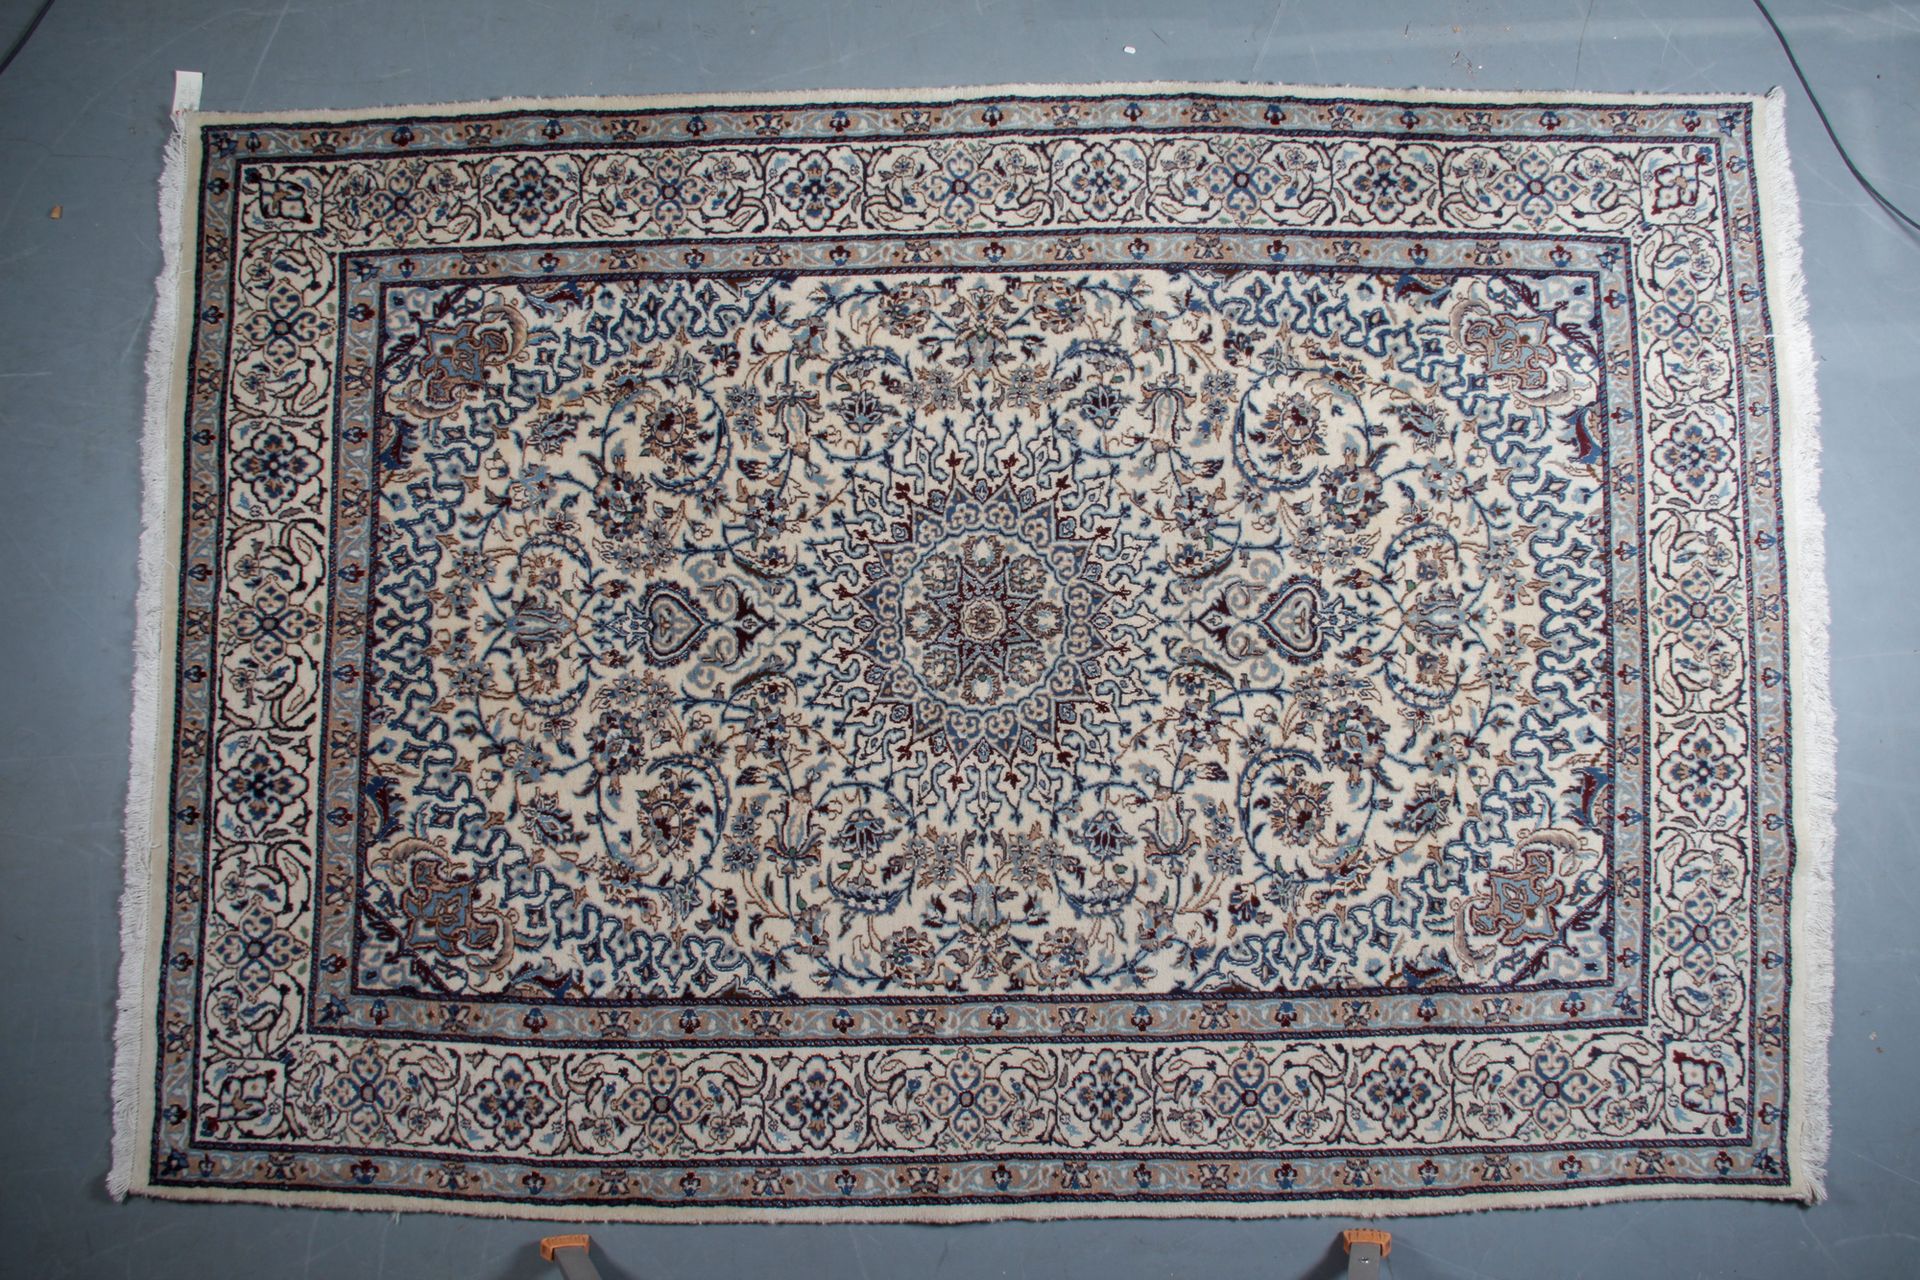 Null 布哈拉地毯，有Gülh装饰。棉花经上的羊毛。

尺寸：196 x 141 cm

(小污点和轻微磨损)。